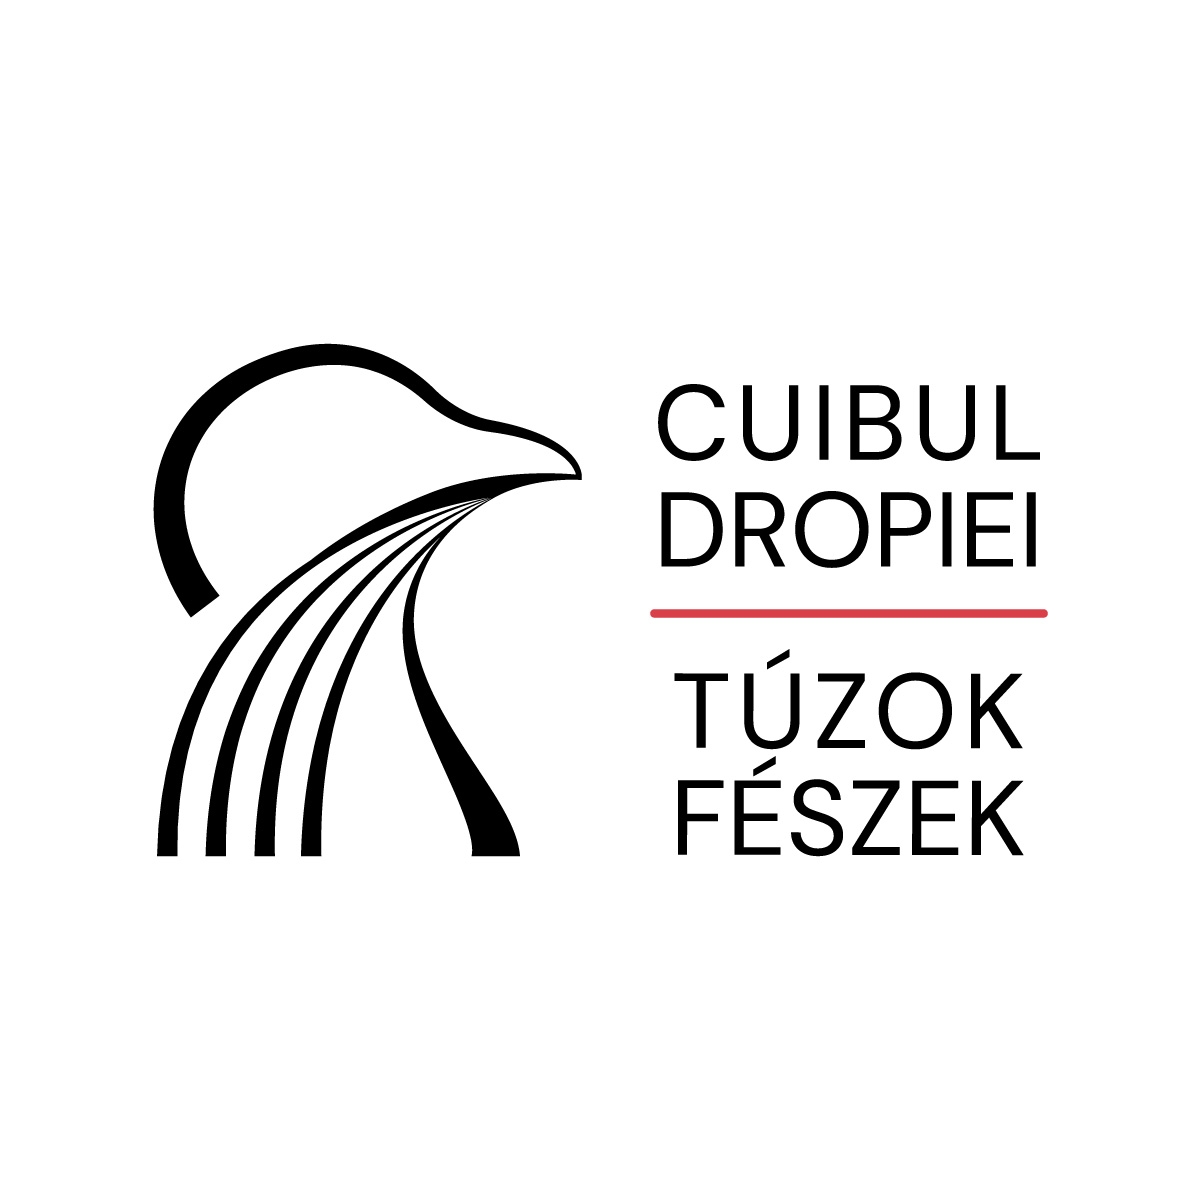 Cuibul Dropiei Tuzok feszek Salonta Romania conservare dropia dropii